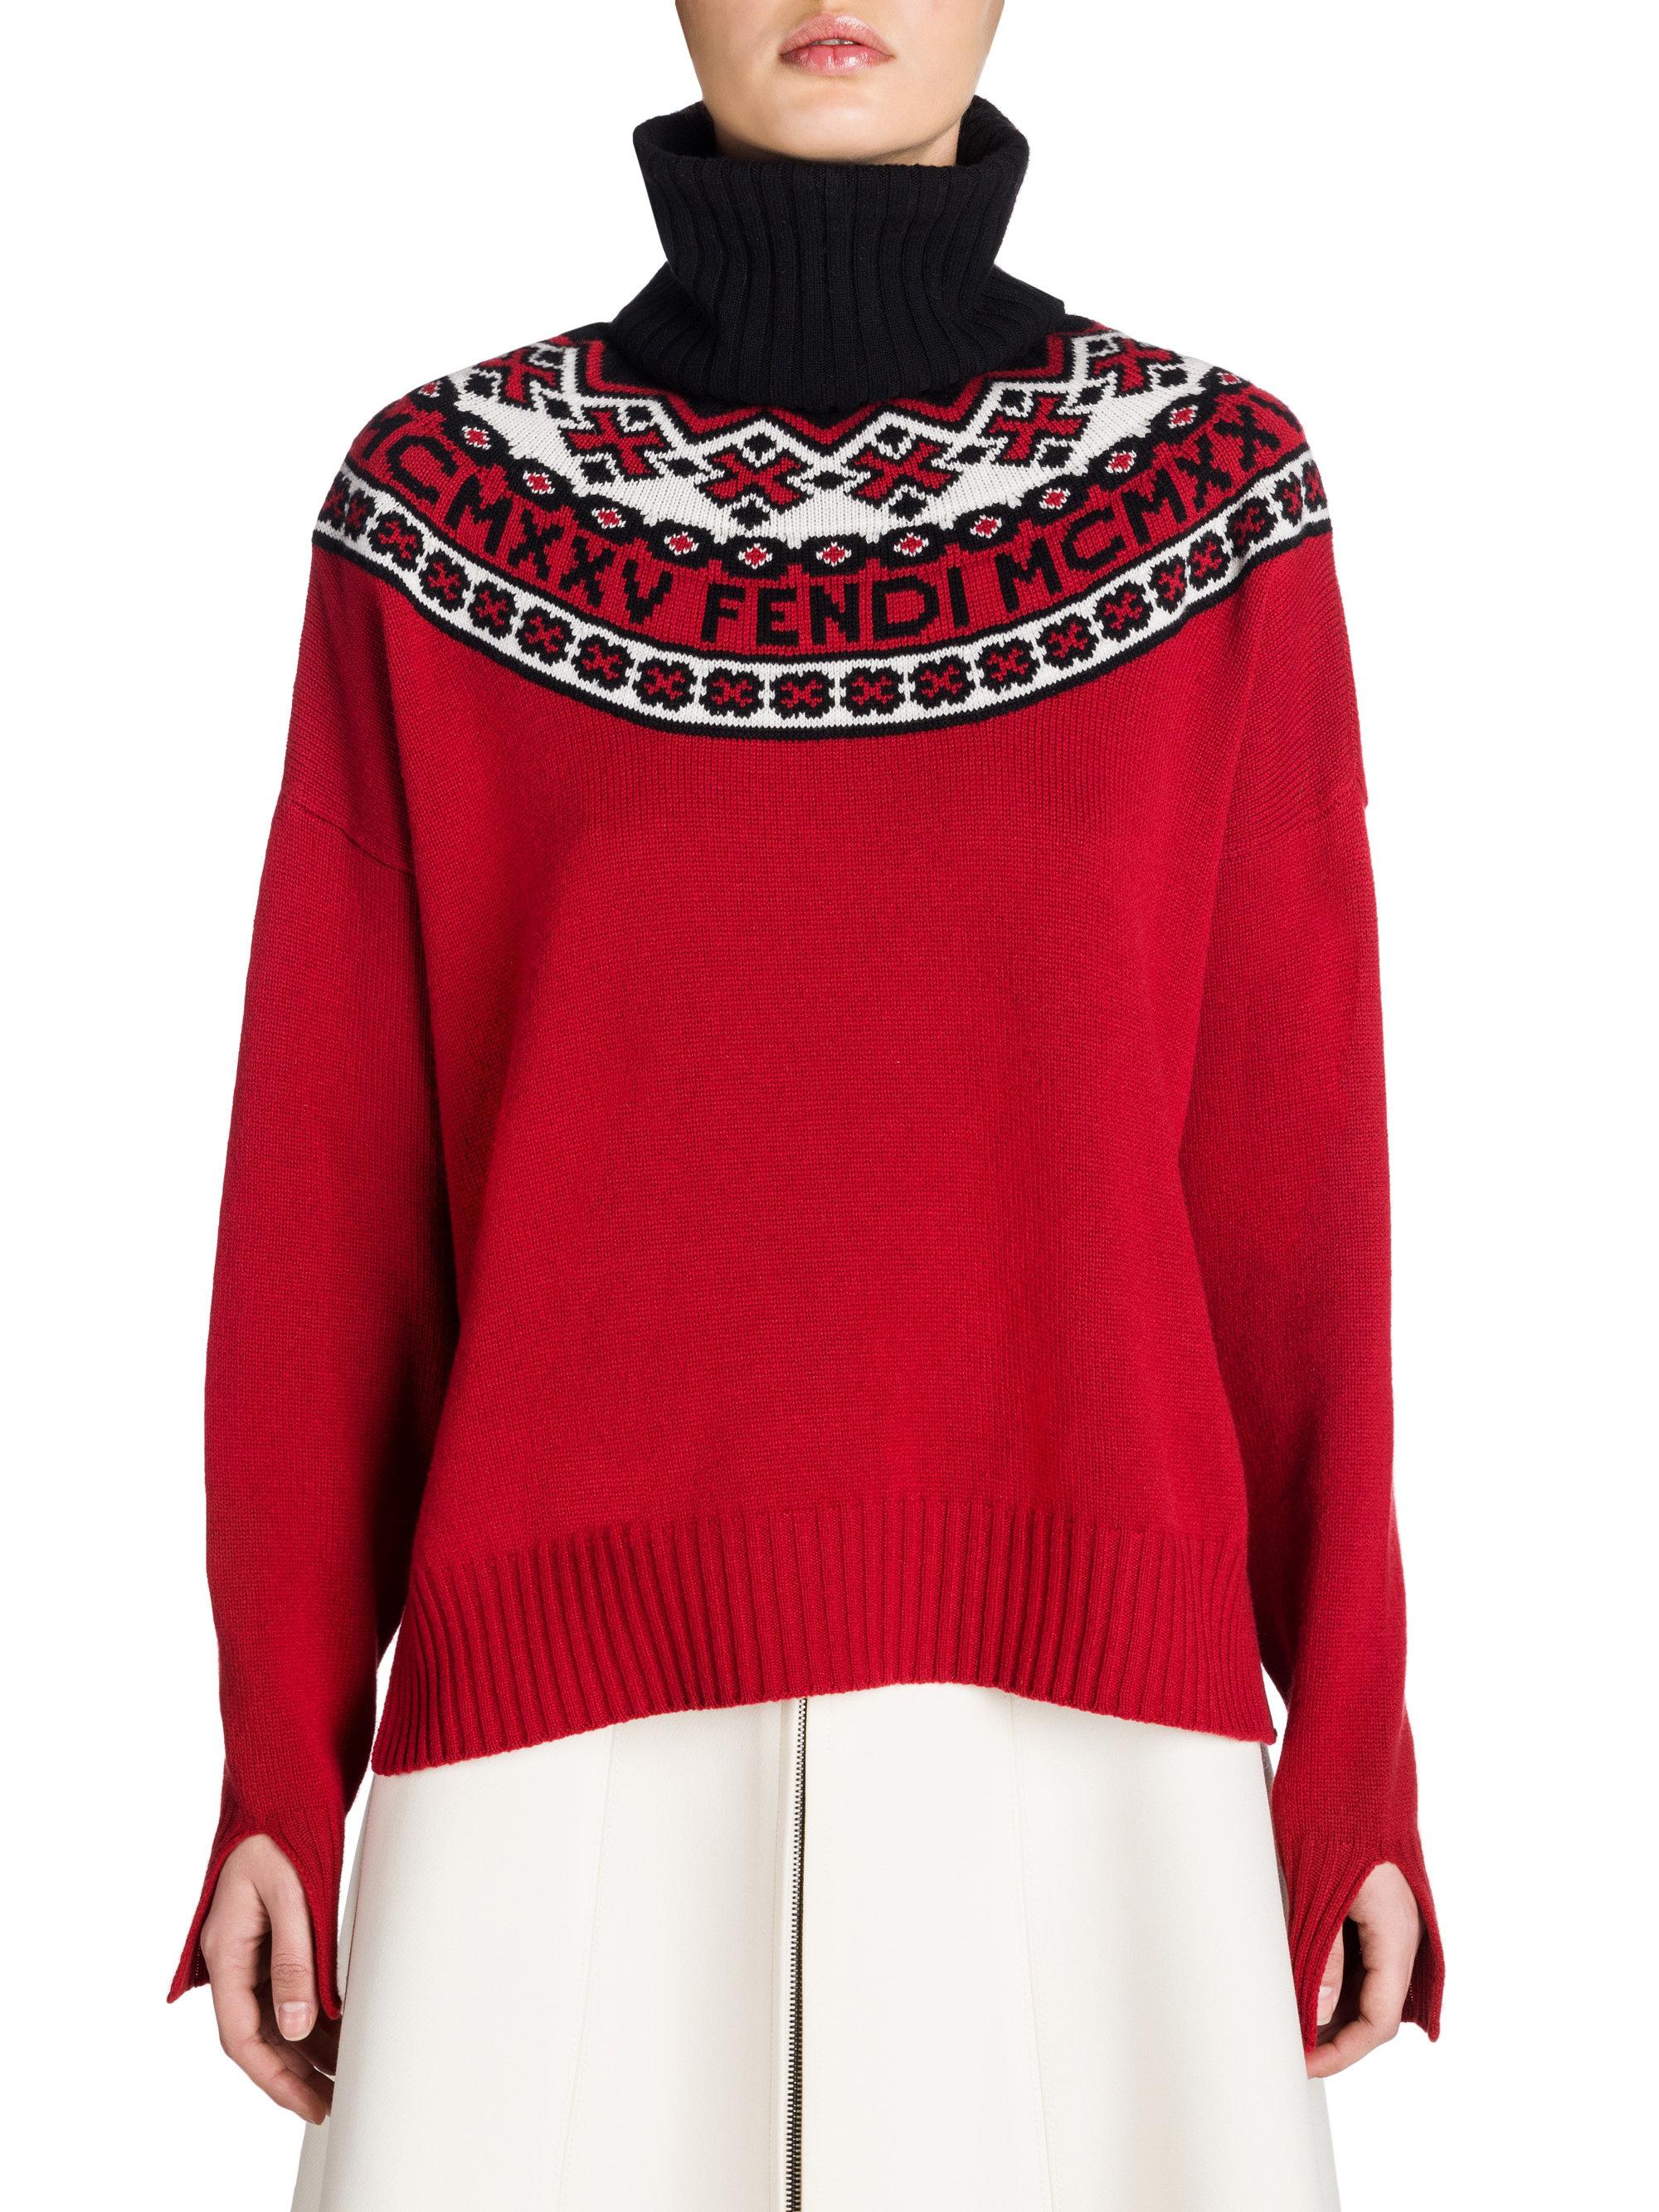 Fendi Fair Isle Wool & Cashmere Turtleneck Sweater in Red - Lyst